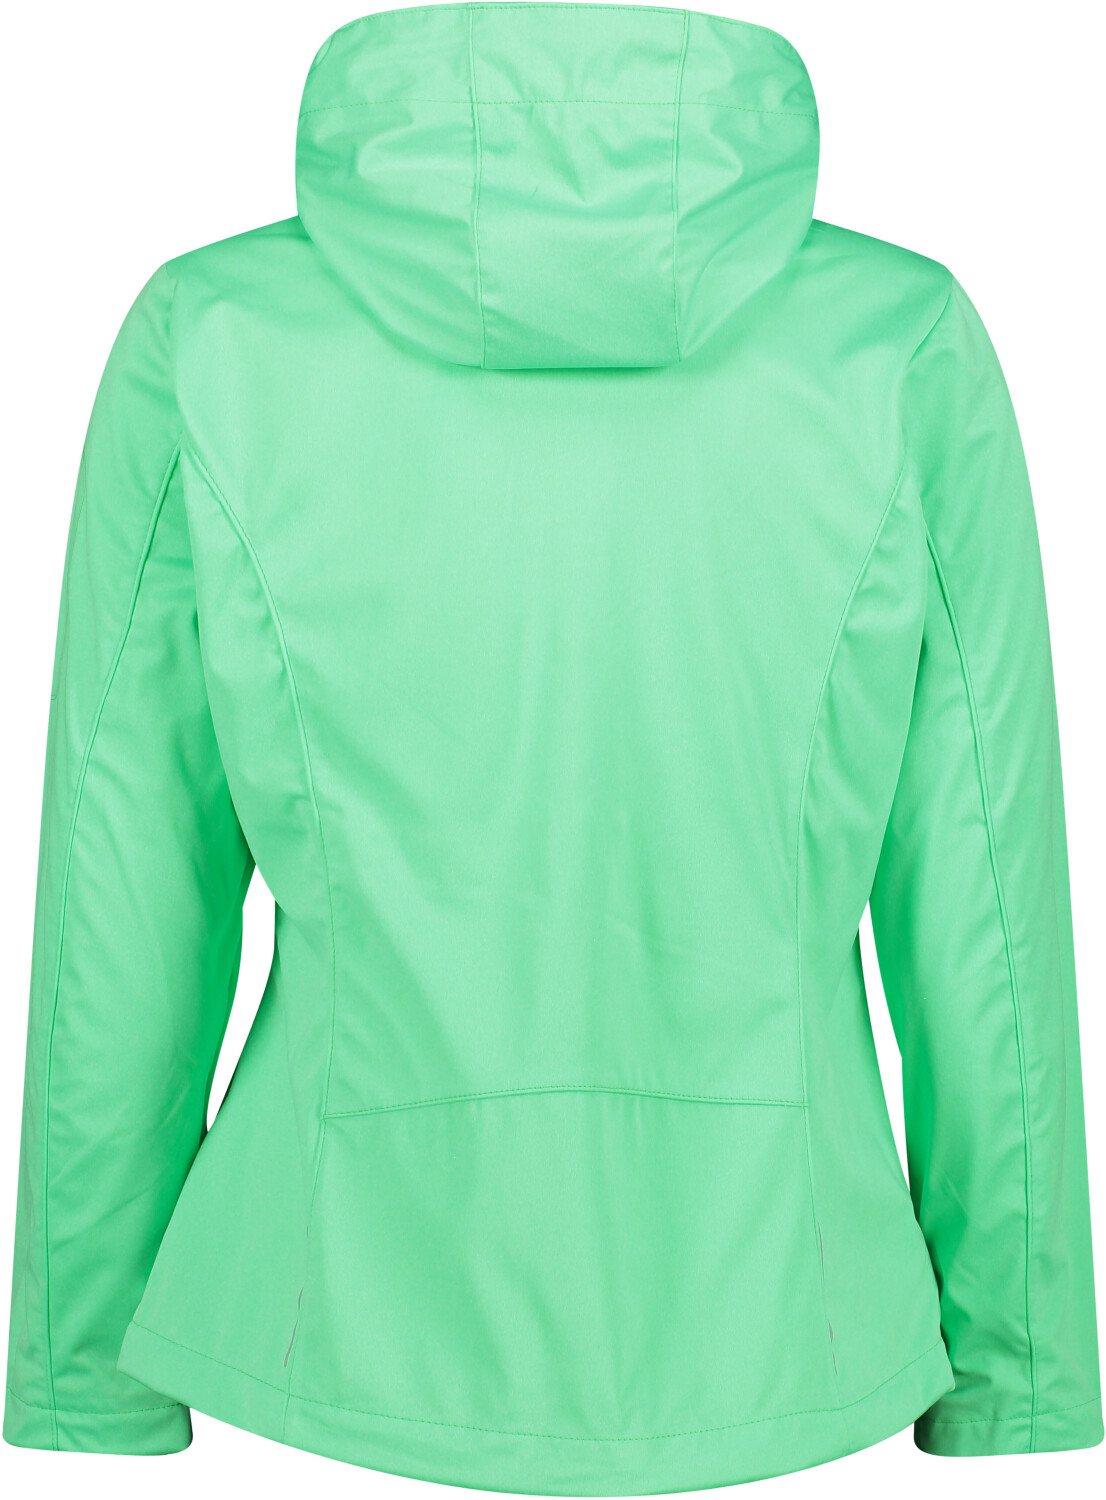 CMP Softshell Jacket Women (39A5016M) menta mel. ab 24,99 € |  Preisvergleich bei